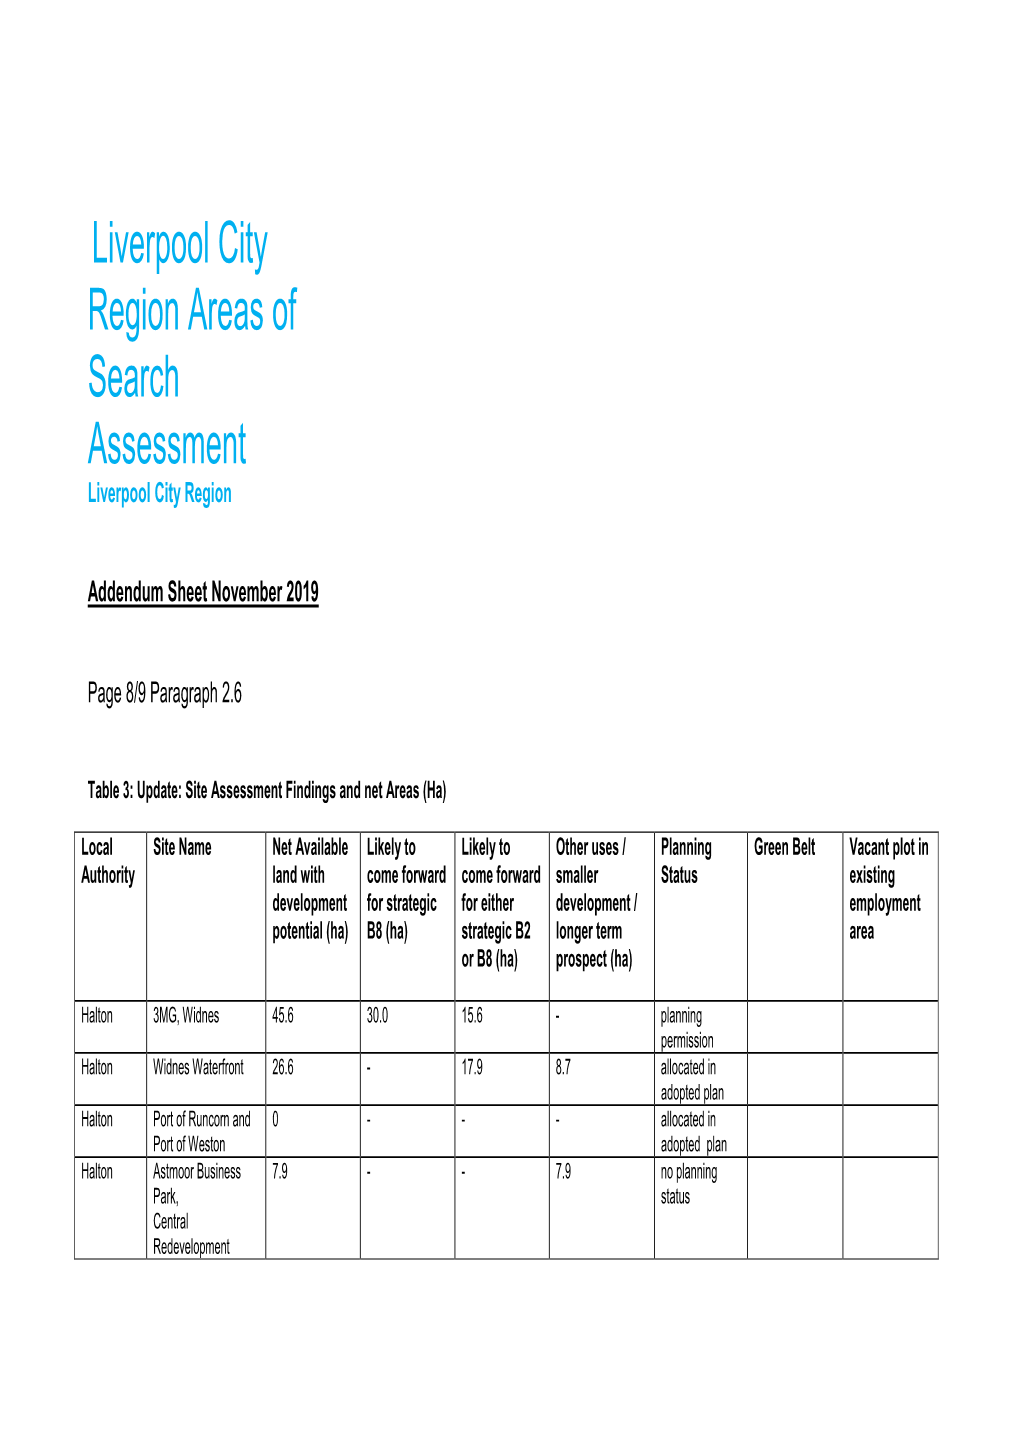 Liverpool City Region Areas of Search Assessment Addendum Sheet